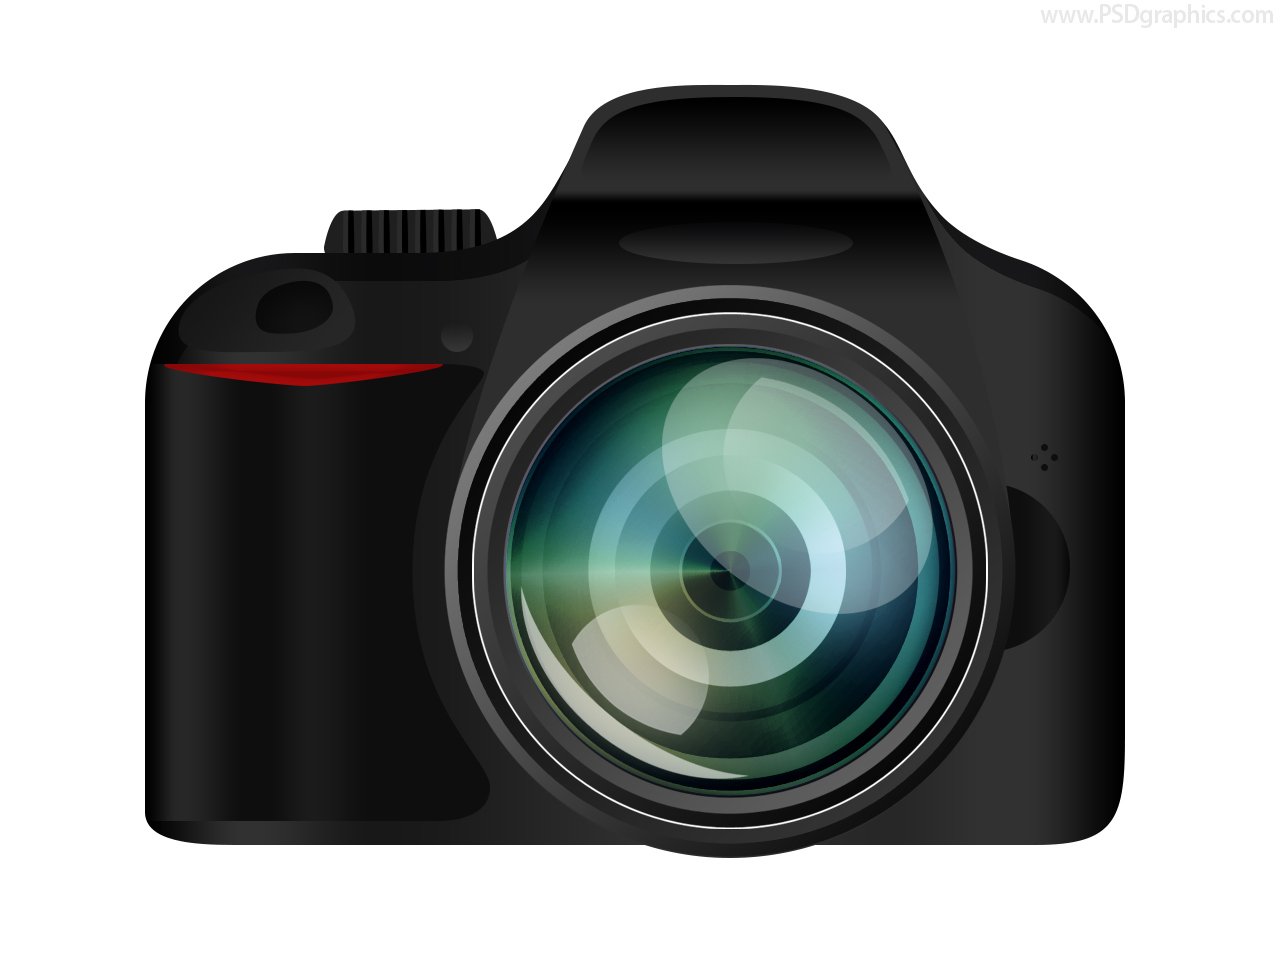 Download Digital camera icon (PSD) | PSDGraphics